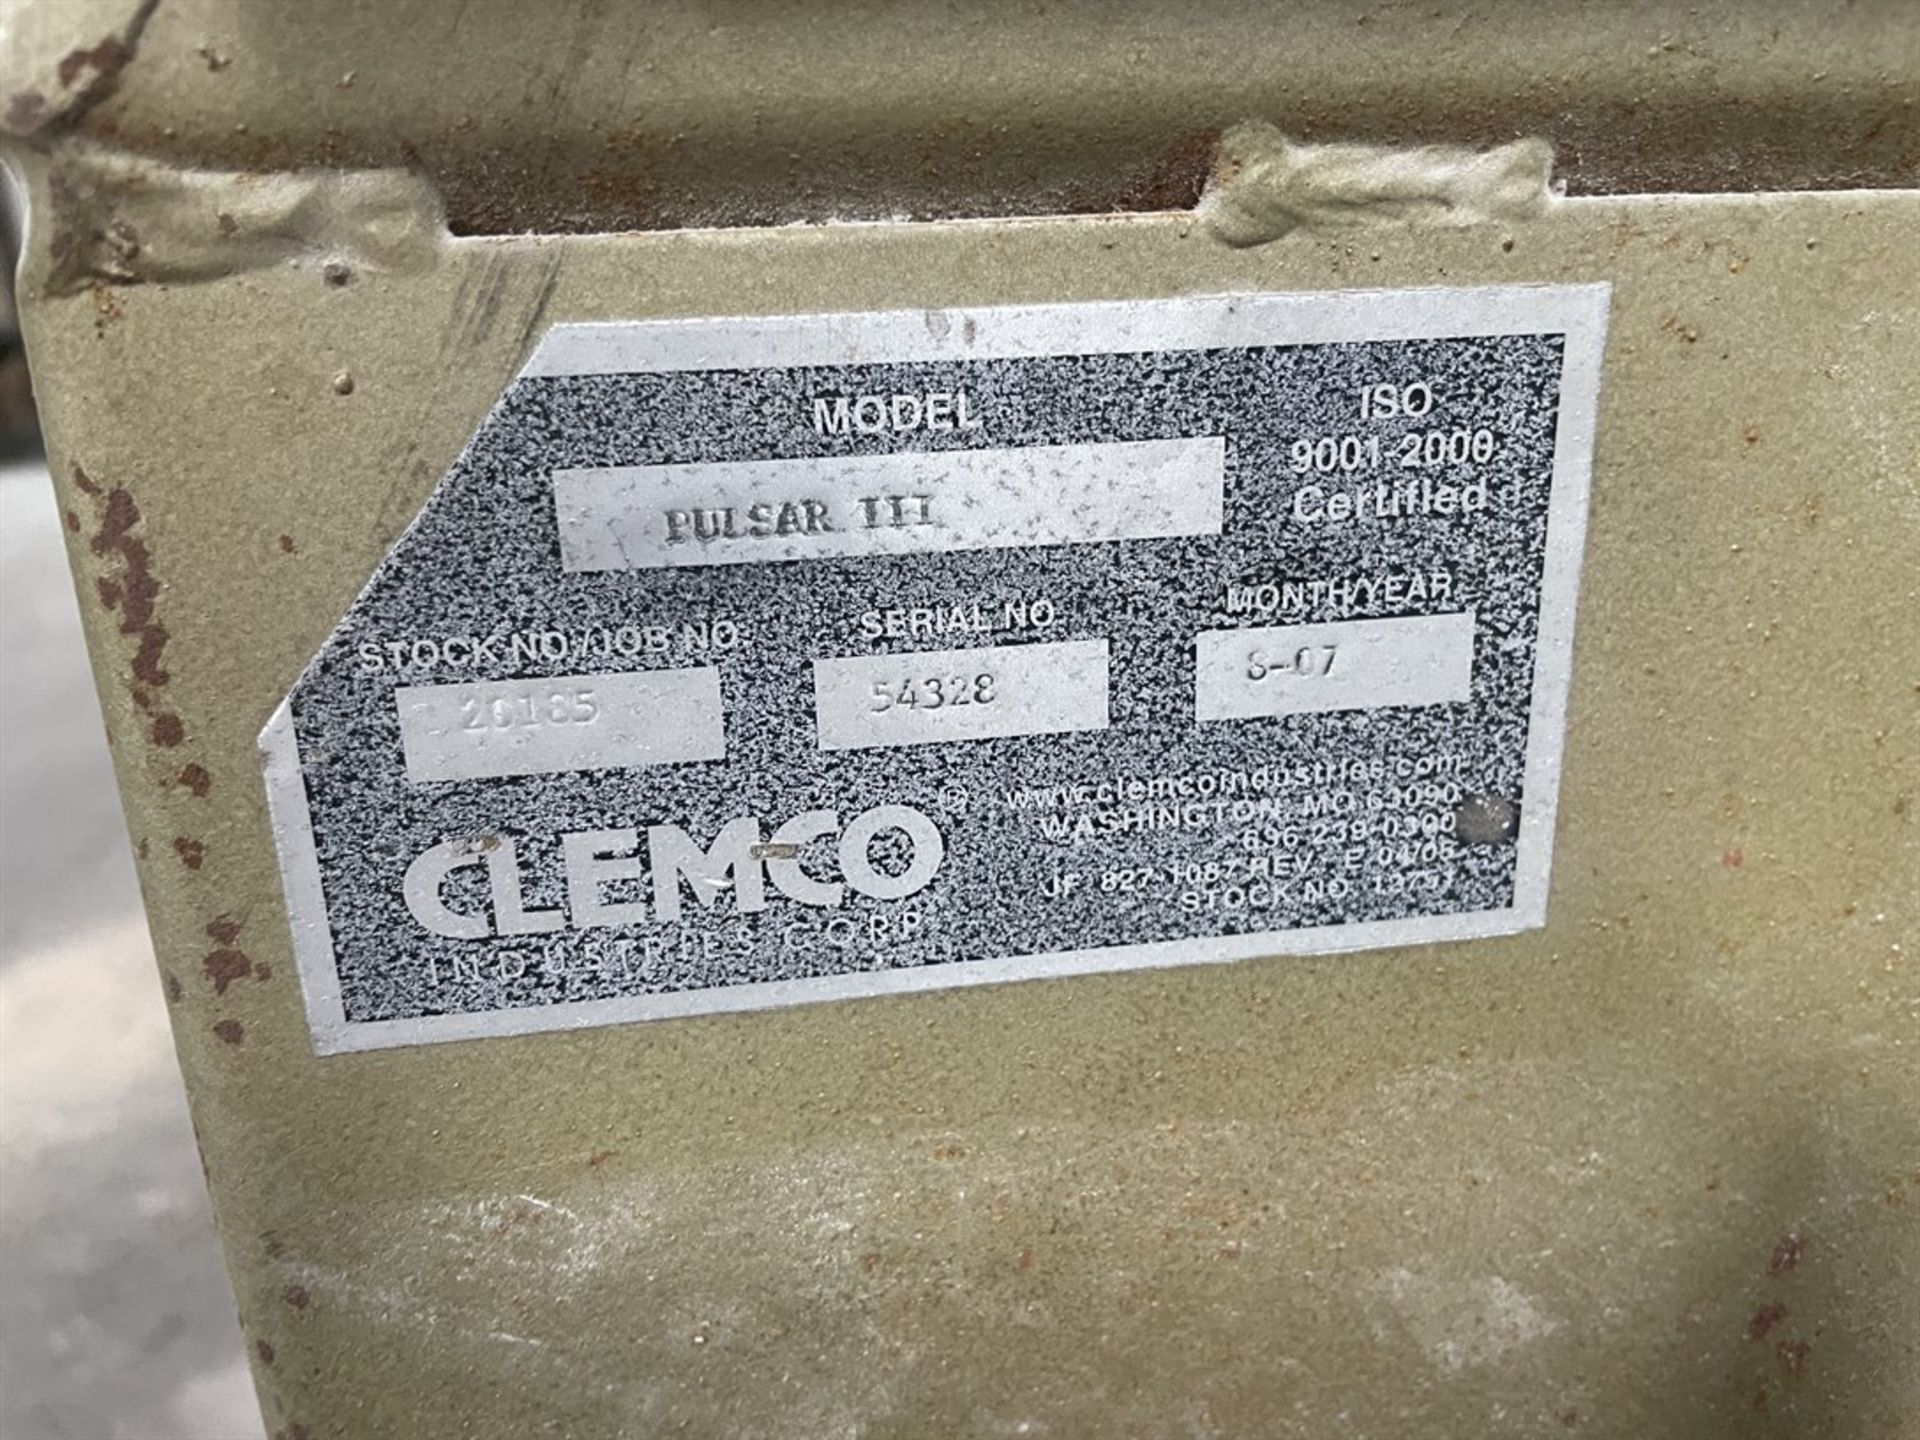 2007 CLEMCO ZERO PULSAR III Blast Cabinets, s/n 54328 & 55796 - Image 3 of 3